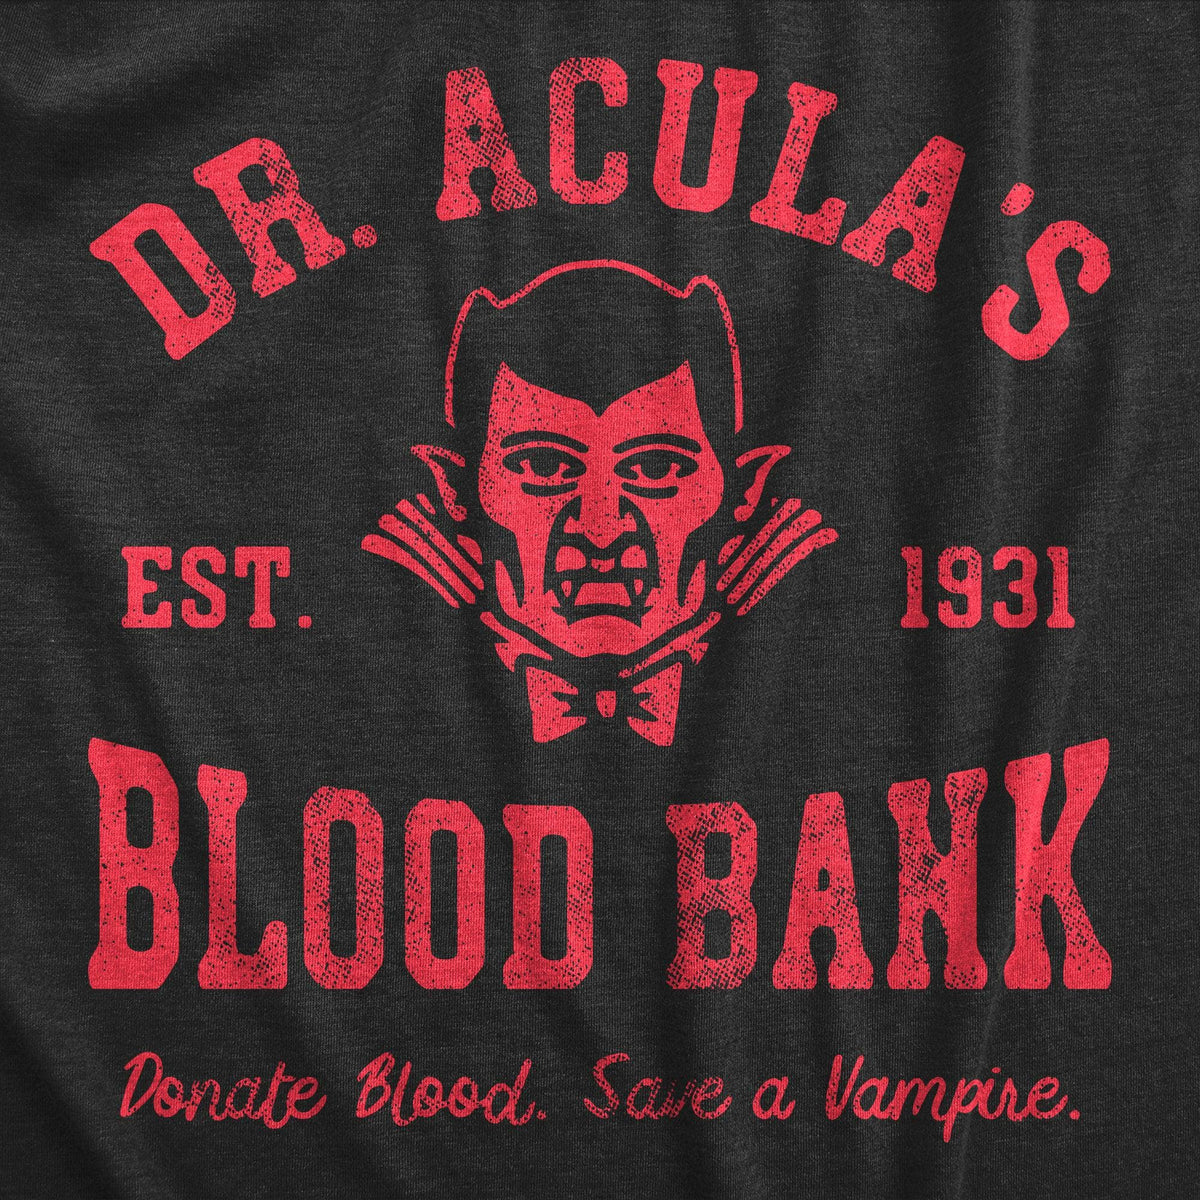 Dr Aculas Blood Bank Women&#39;s Tshirt  -  Crazy Dog T-Shirts